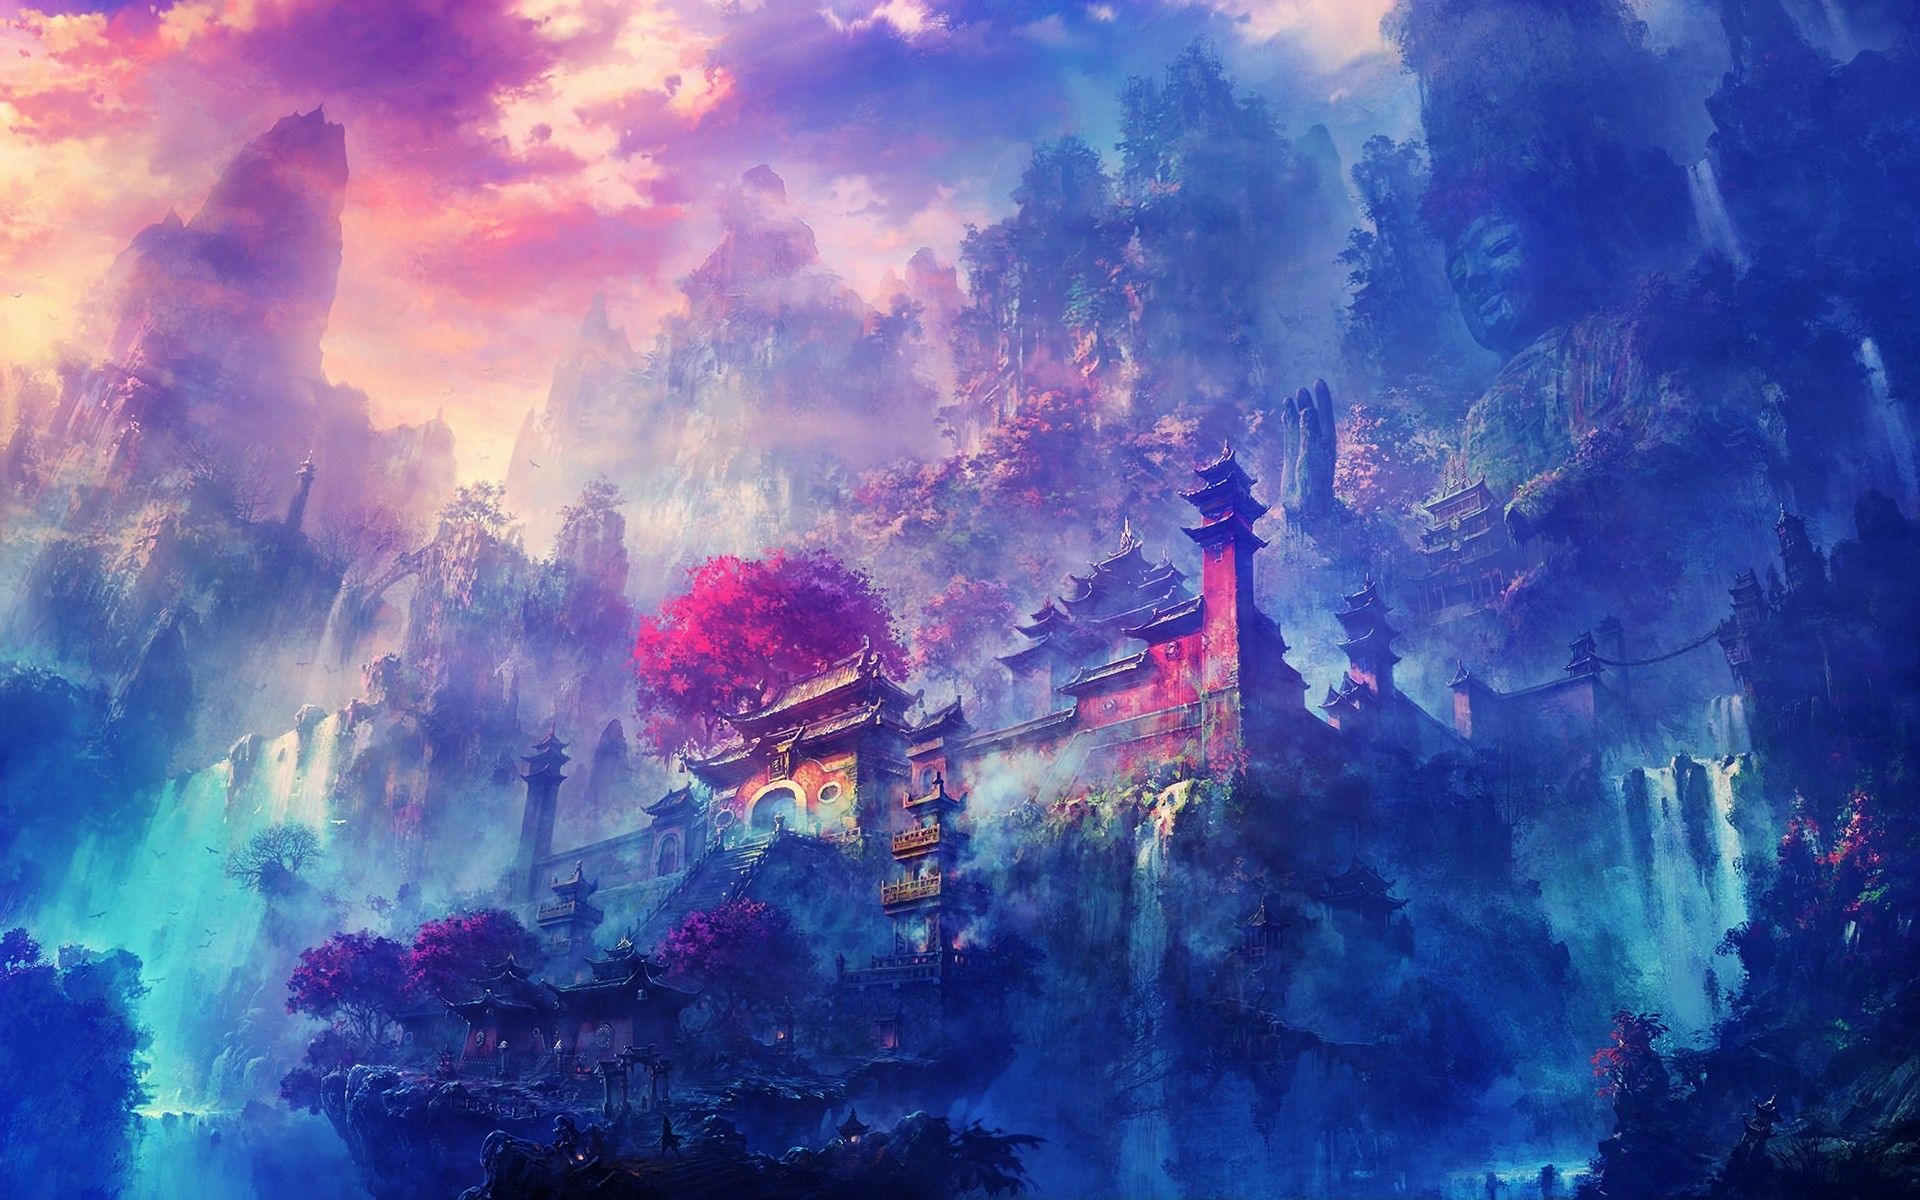 Dark Anime Scenery wallpaperDownload free stunning High